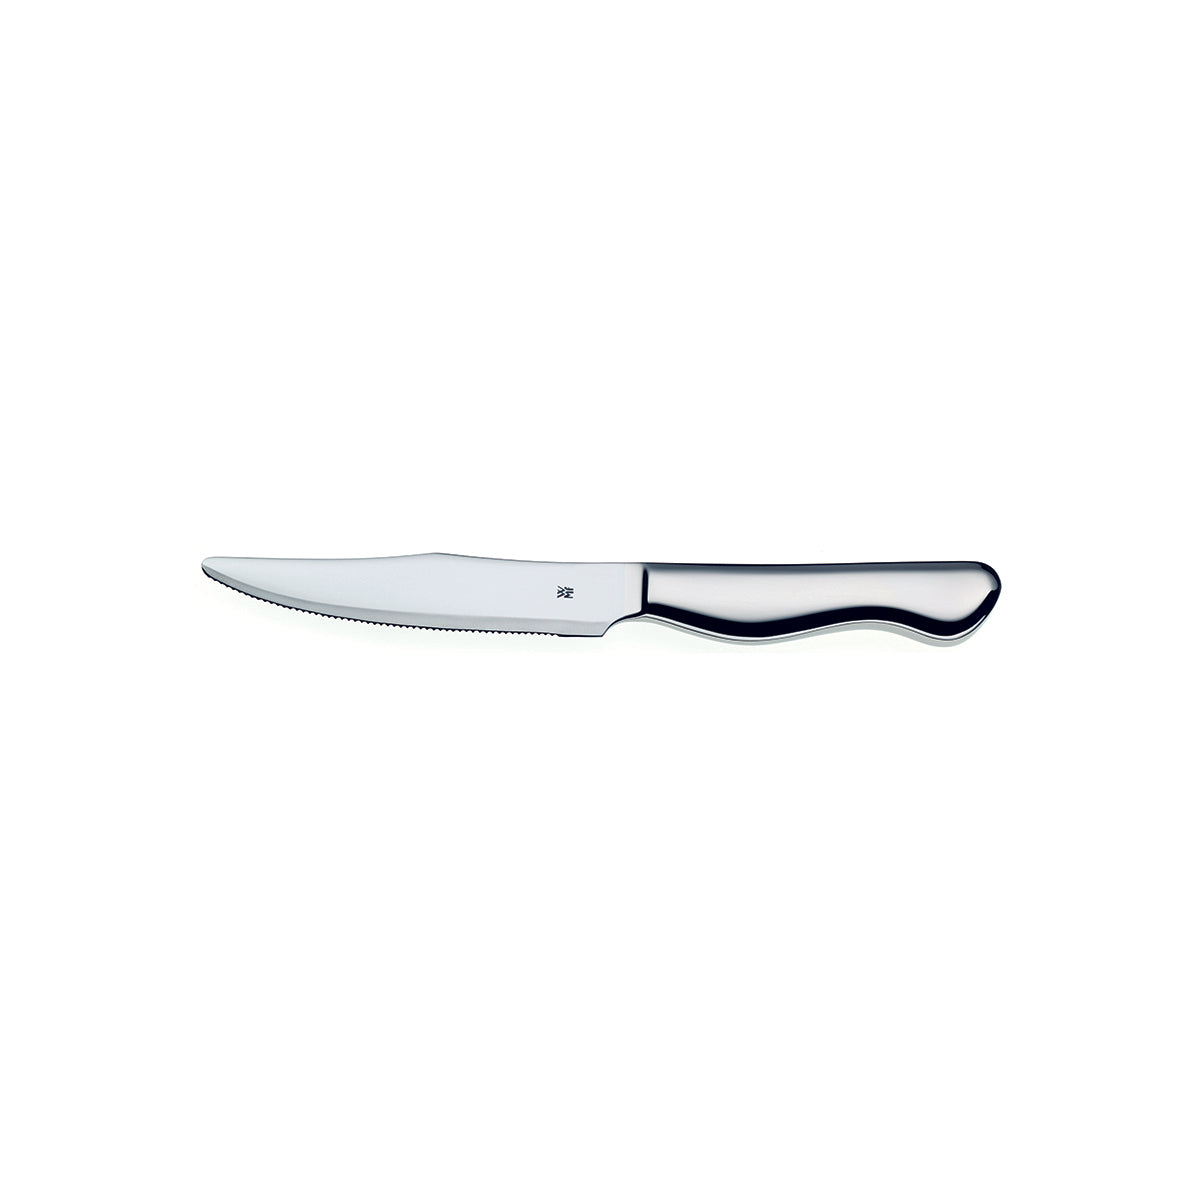 12.9014.6040 WMF Solid Steak Knife Stainless Steel Tomkin Australia Hospitality Supplies